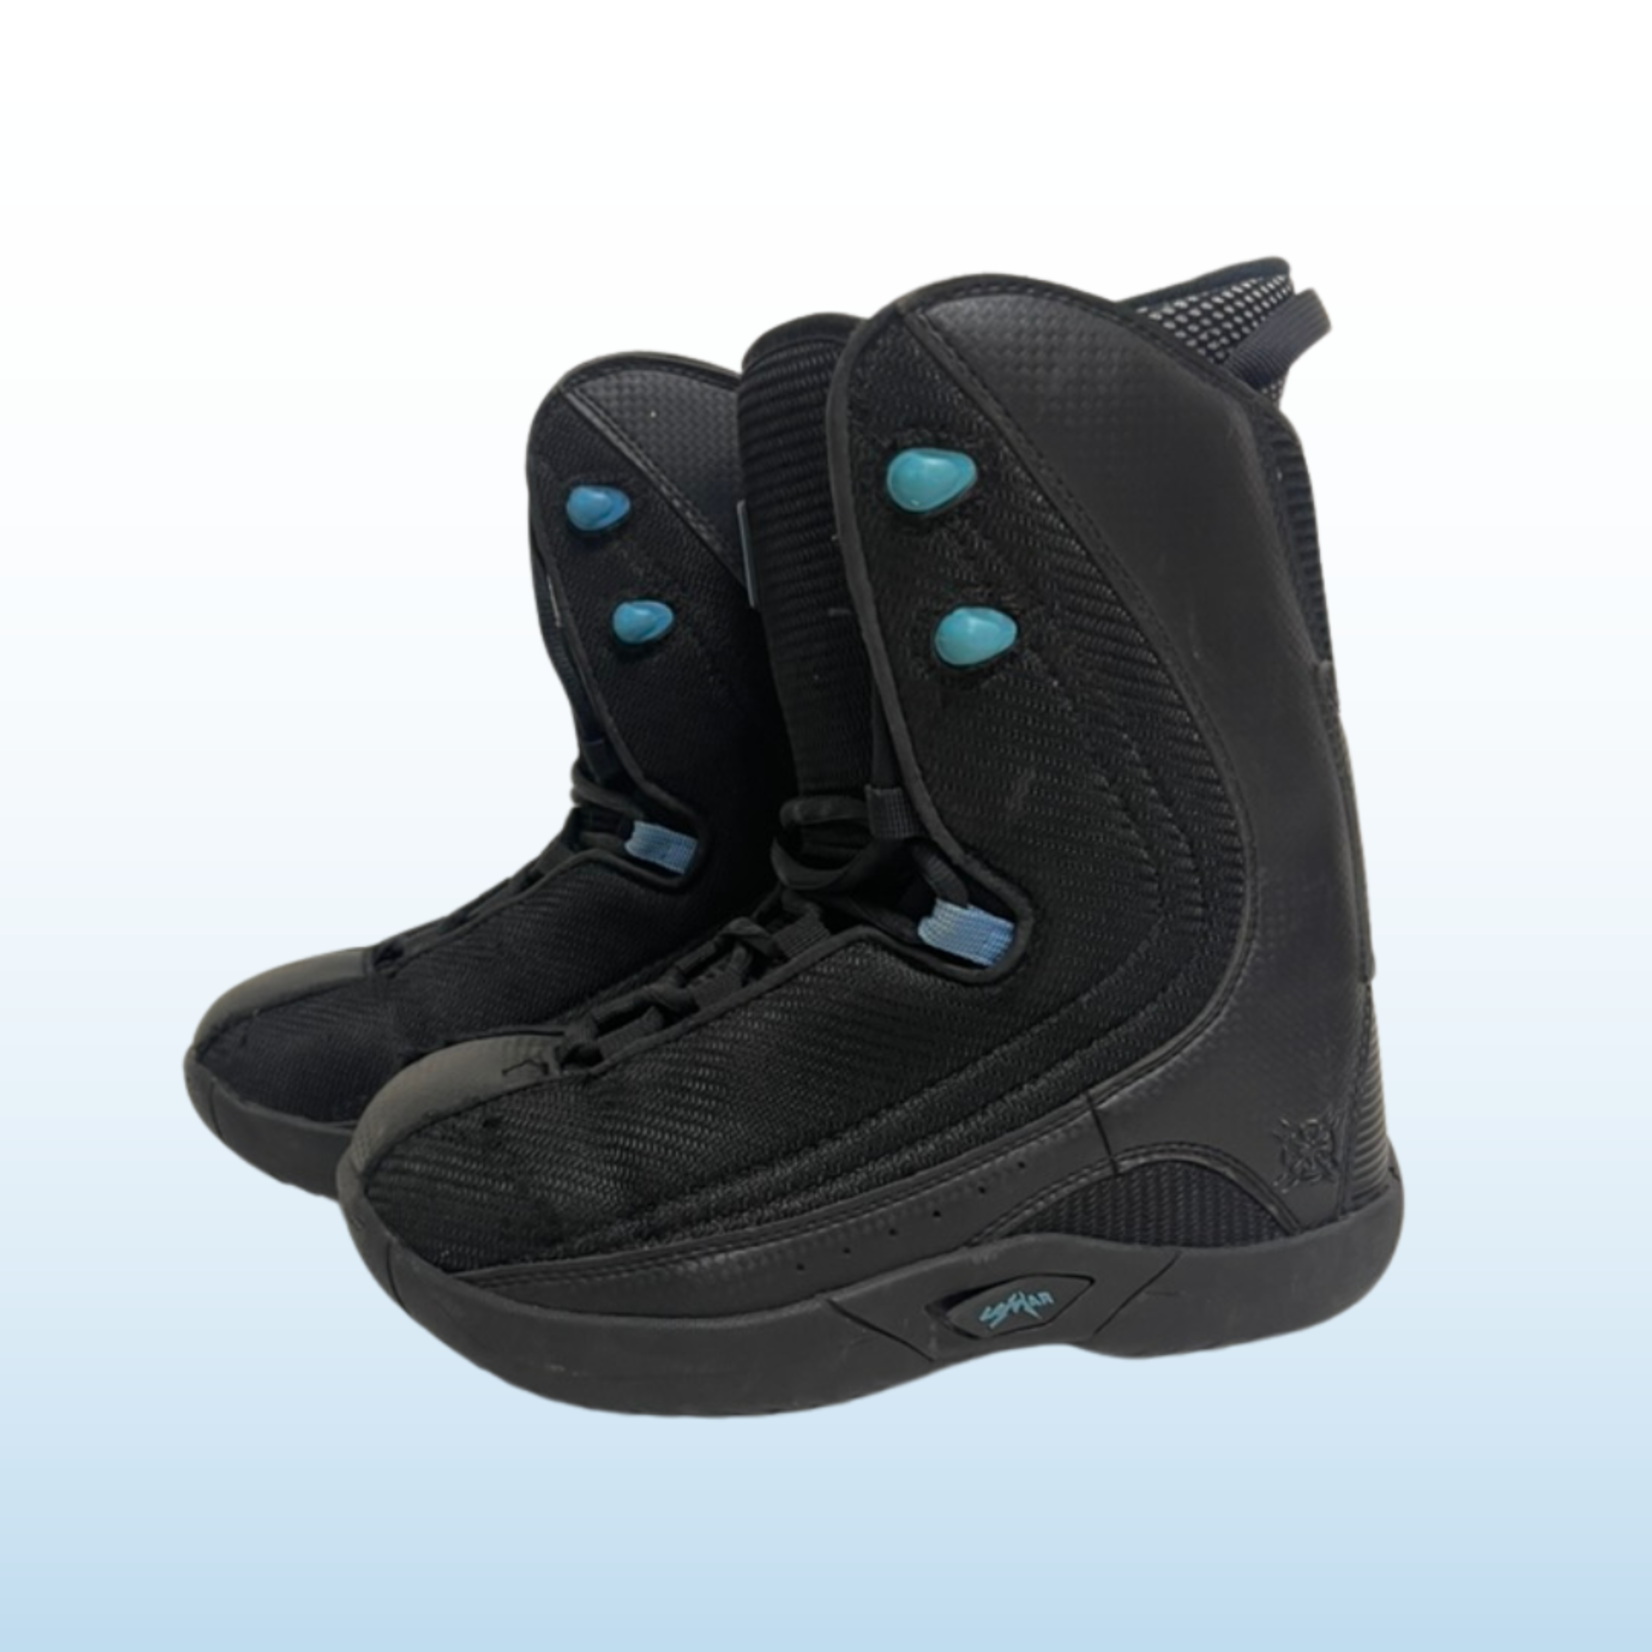 Lamar Lamar Justice Snowboard Boots, Size 7 WMNS